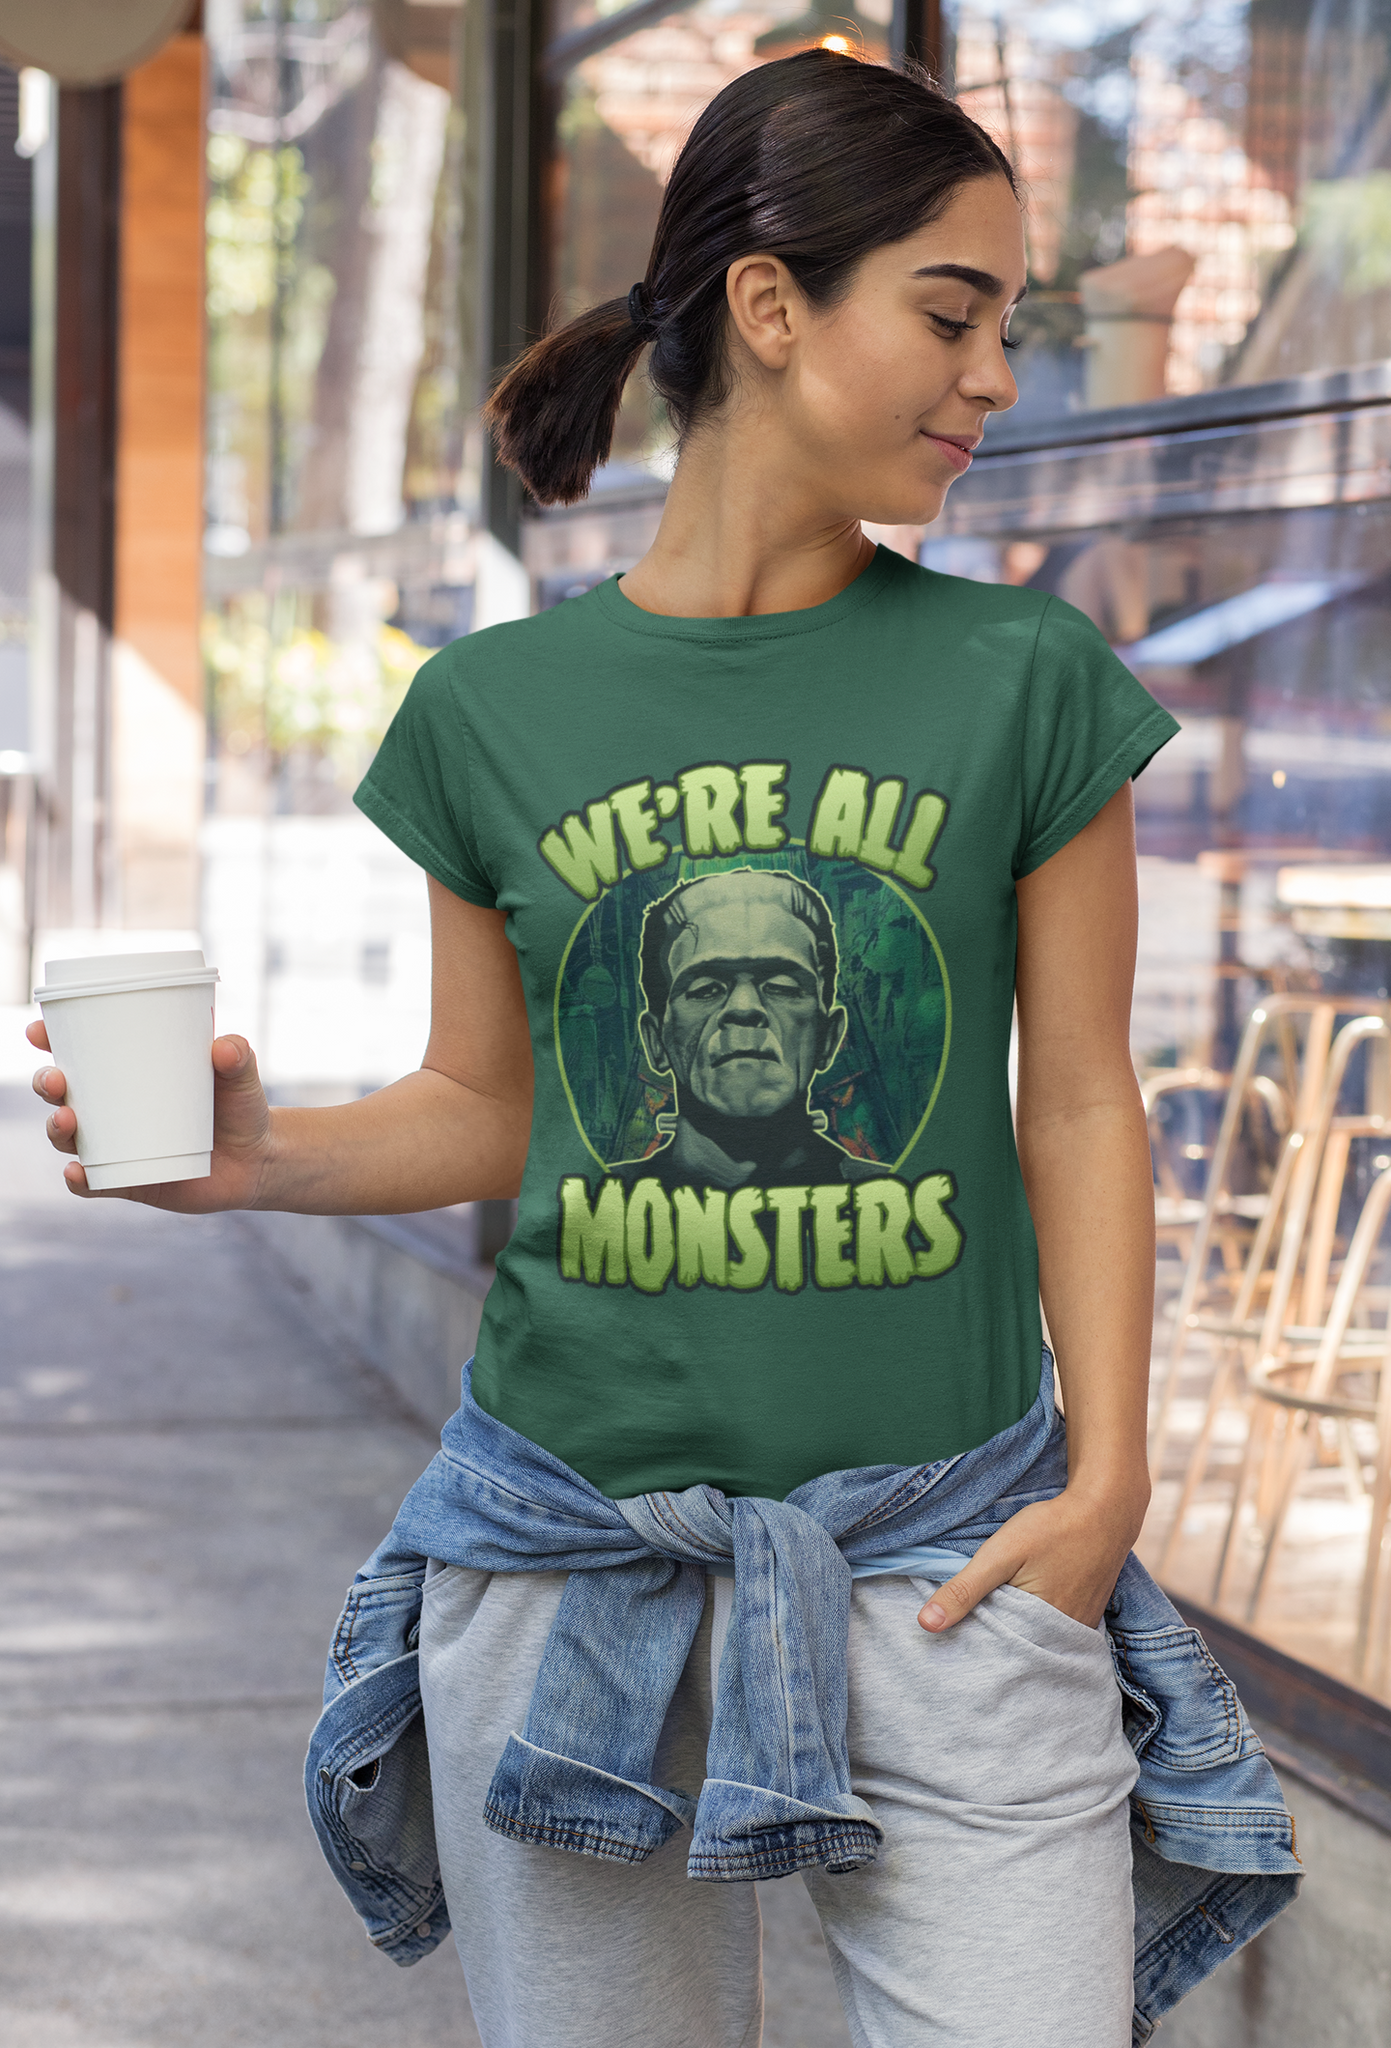 Frankenstein T Shirt, The Monster T Shirt, Were All Monsters Tshirt, Halloween Gifts